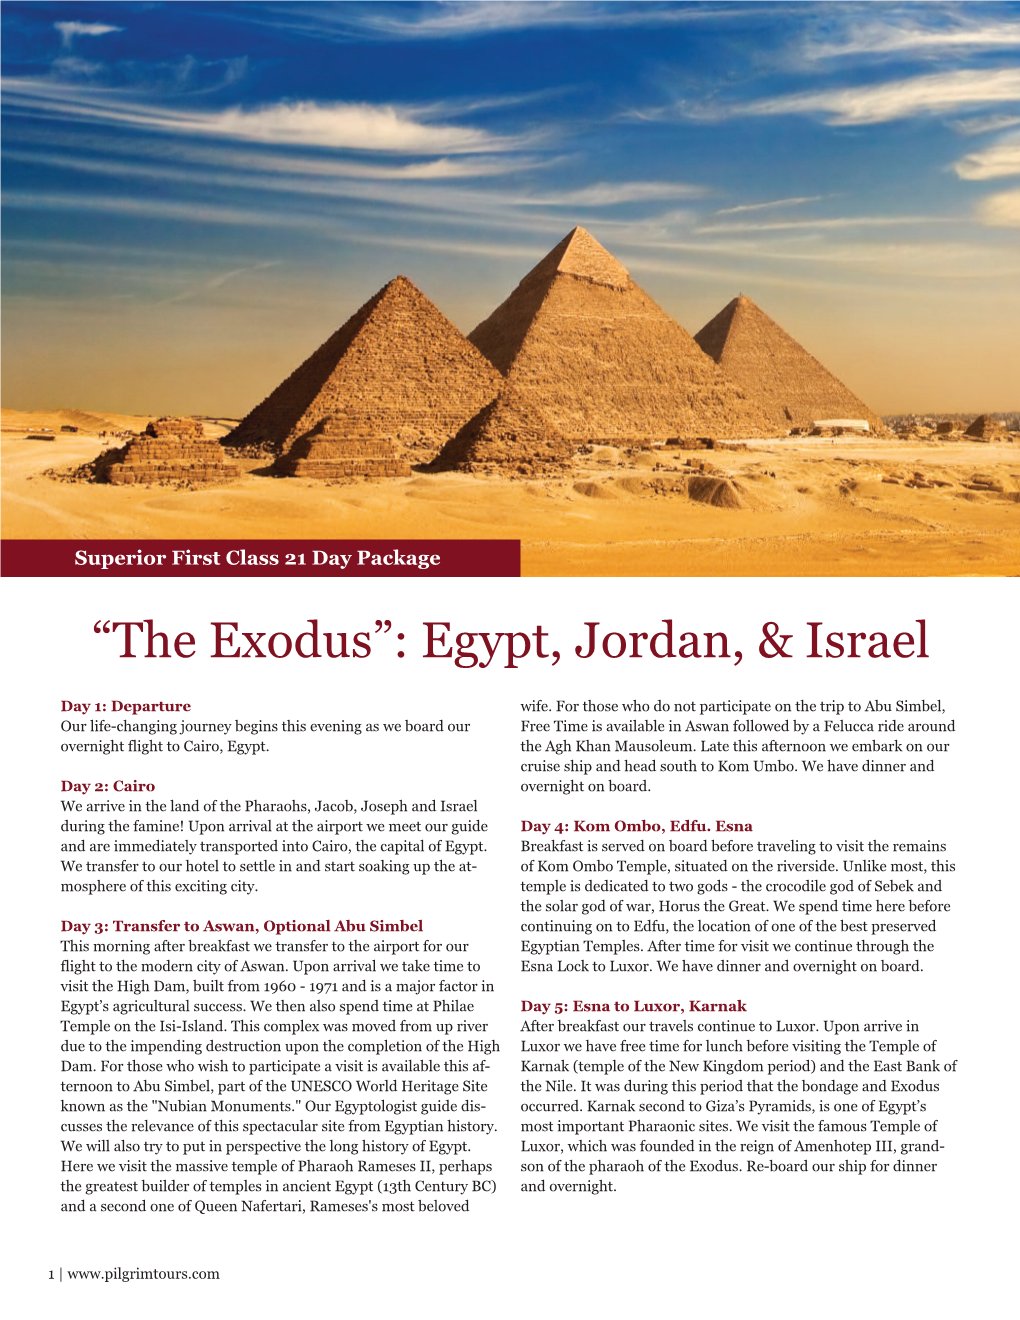 The Exodus”: Egypt, Jordan, & Israel